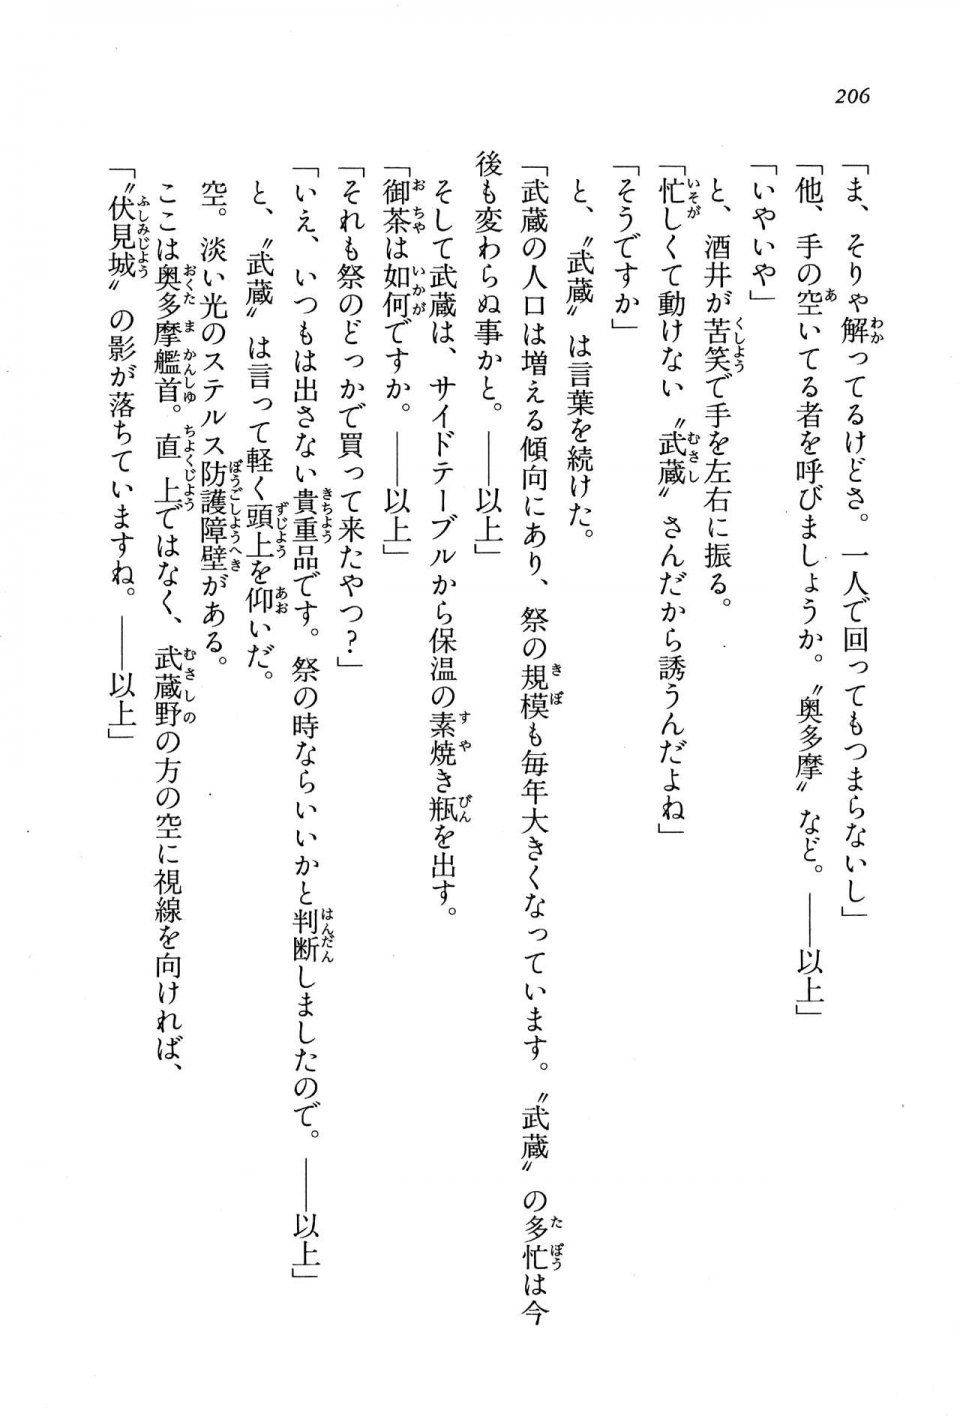 Kyoukai Senjou no Horizon BD Special Mininovel Vol 8(4B) - Photo #210